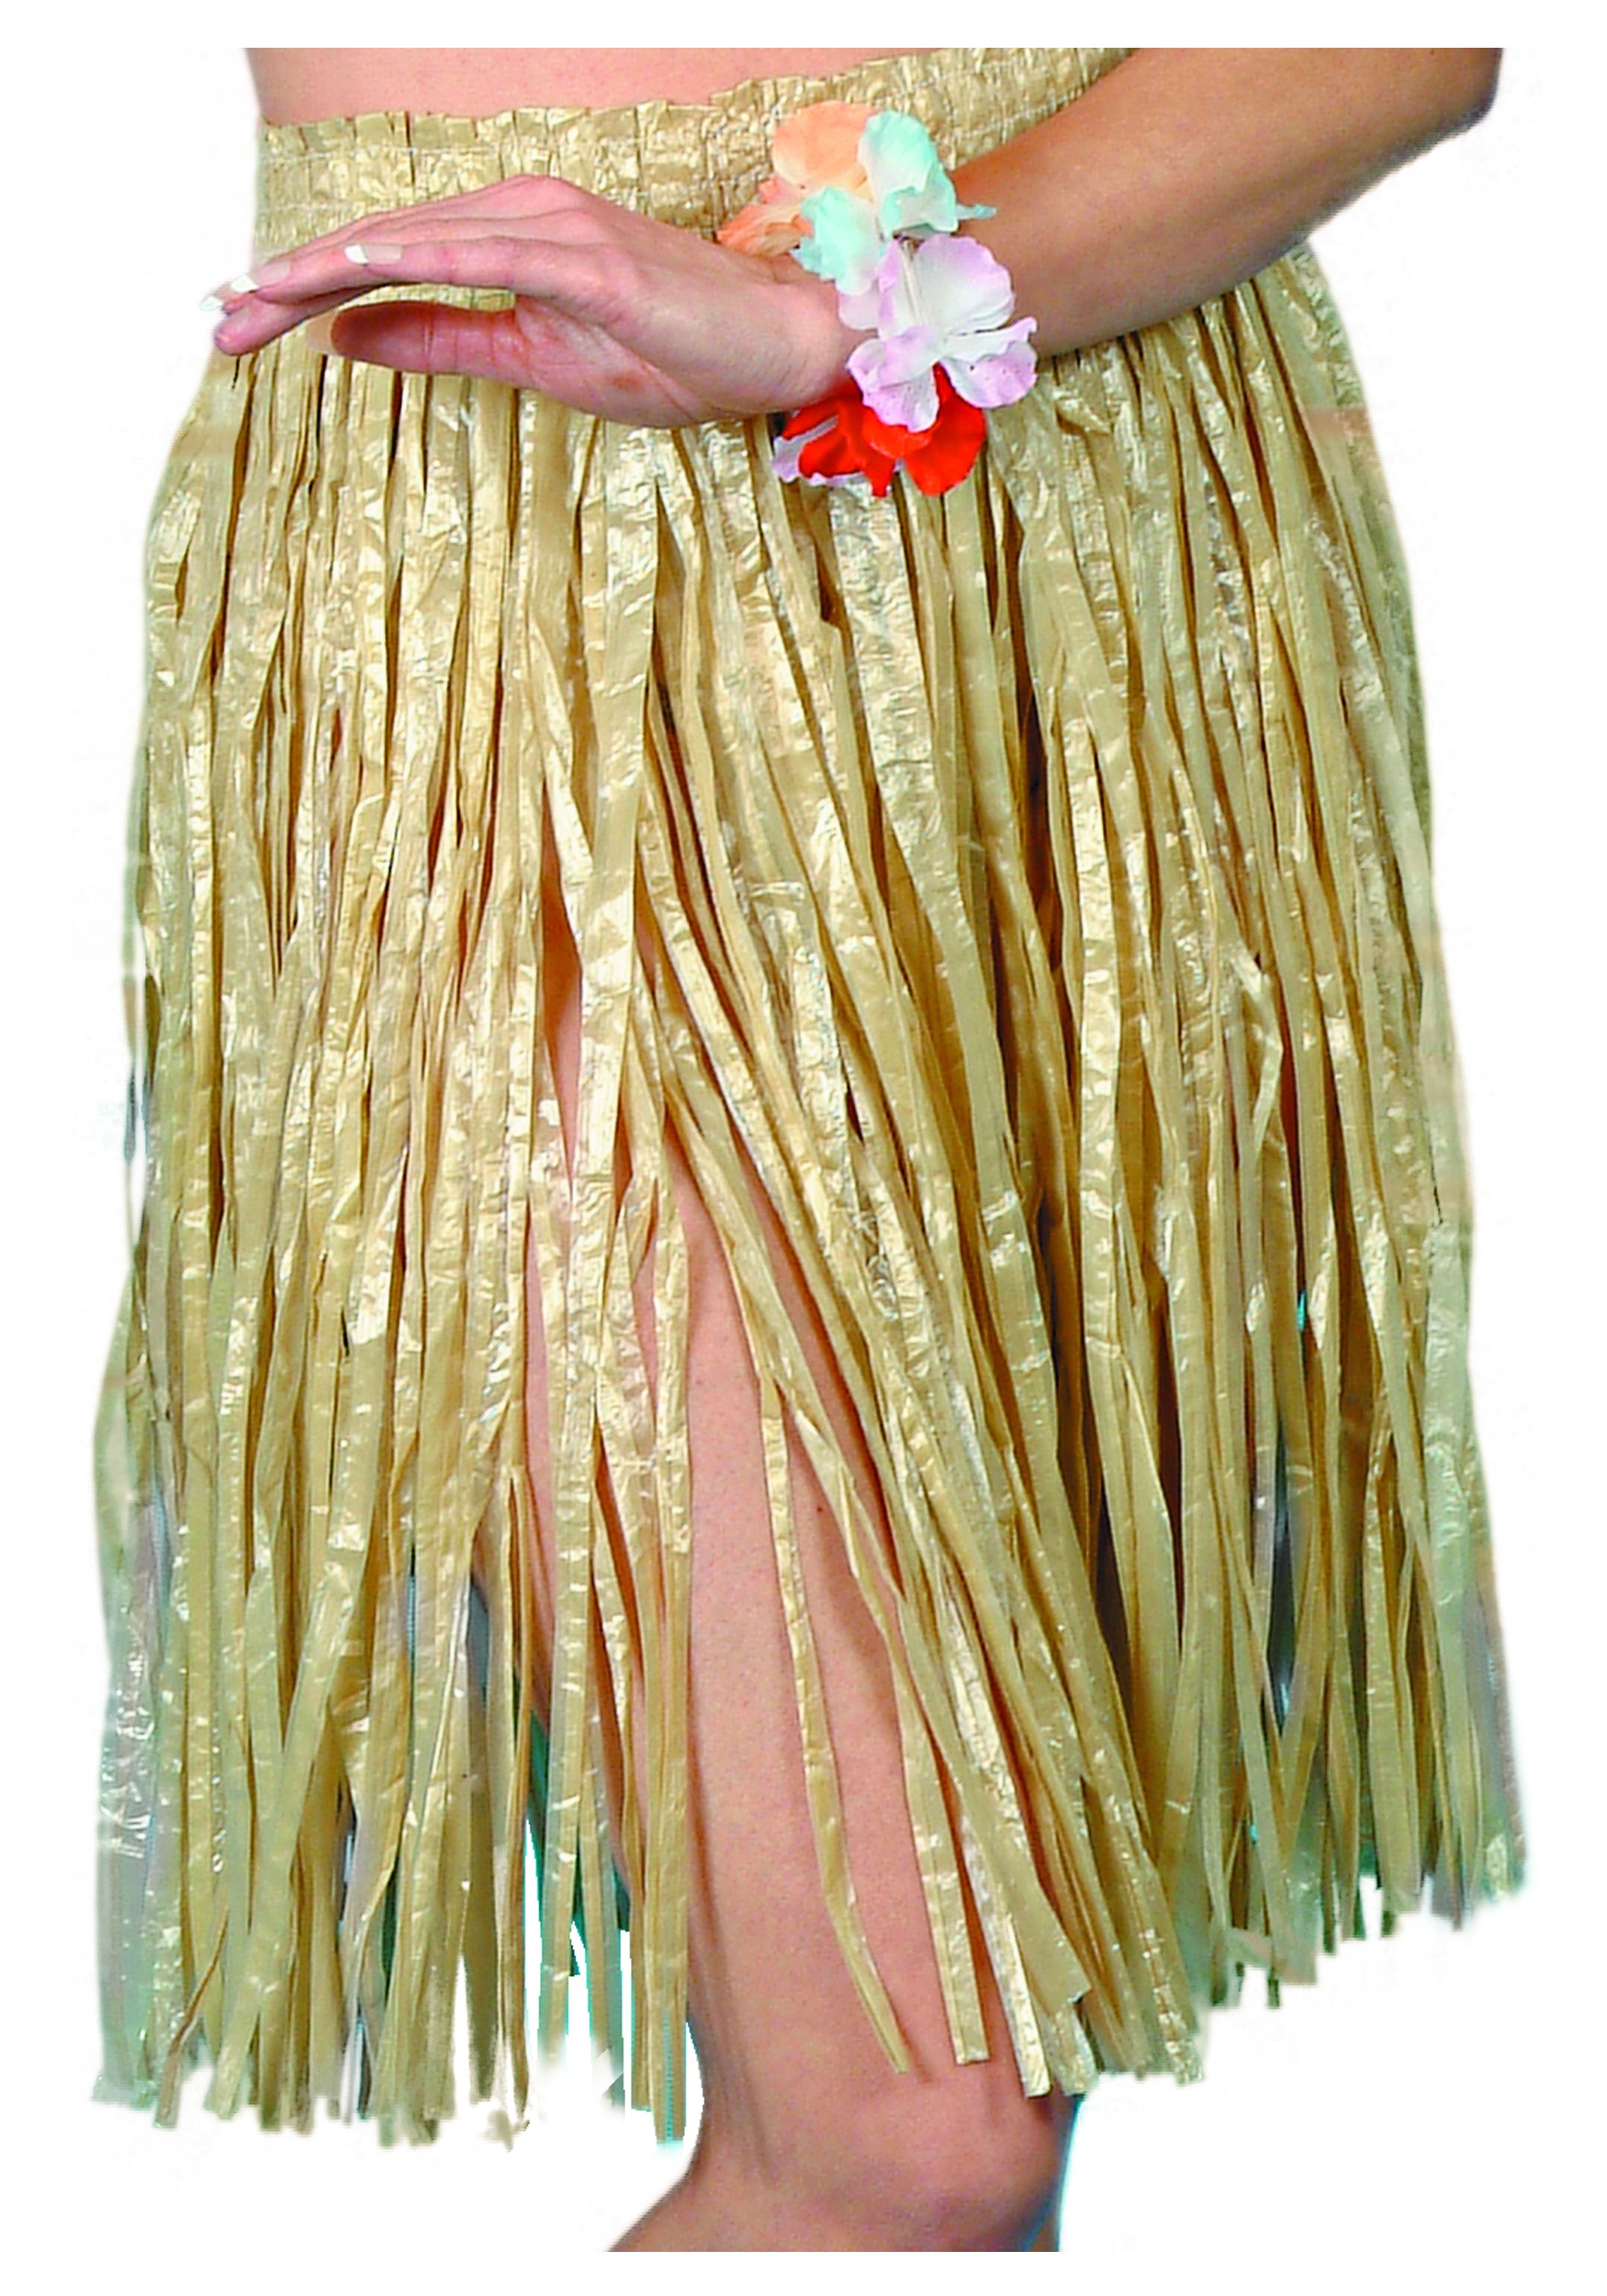 COD+IN STOCK】Ladies Hawaiian Hula Skirt Headband Wristbands Garland Bra  Fancy Dress Costume Flower Party Accessories 5Pcs Hawaii Party Supplies